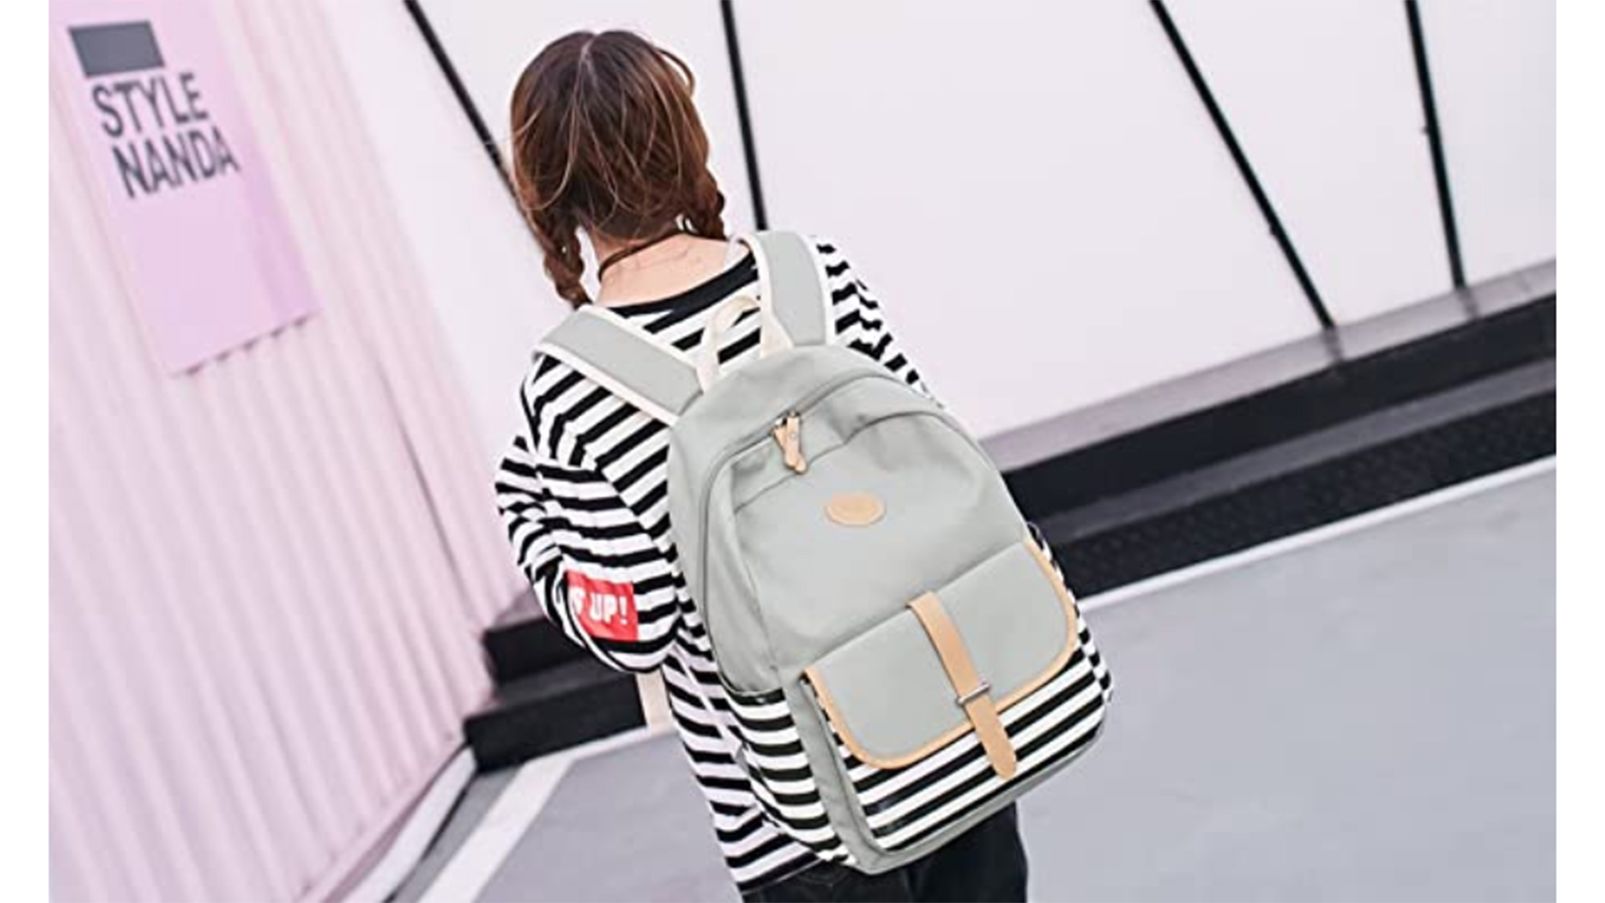 Chic Designs Girls Kids Fashion School Backpack Bookbags Shoulder Satchel Bags